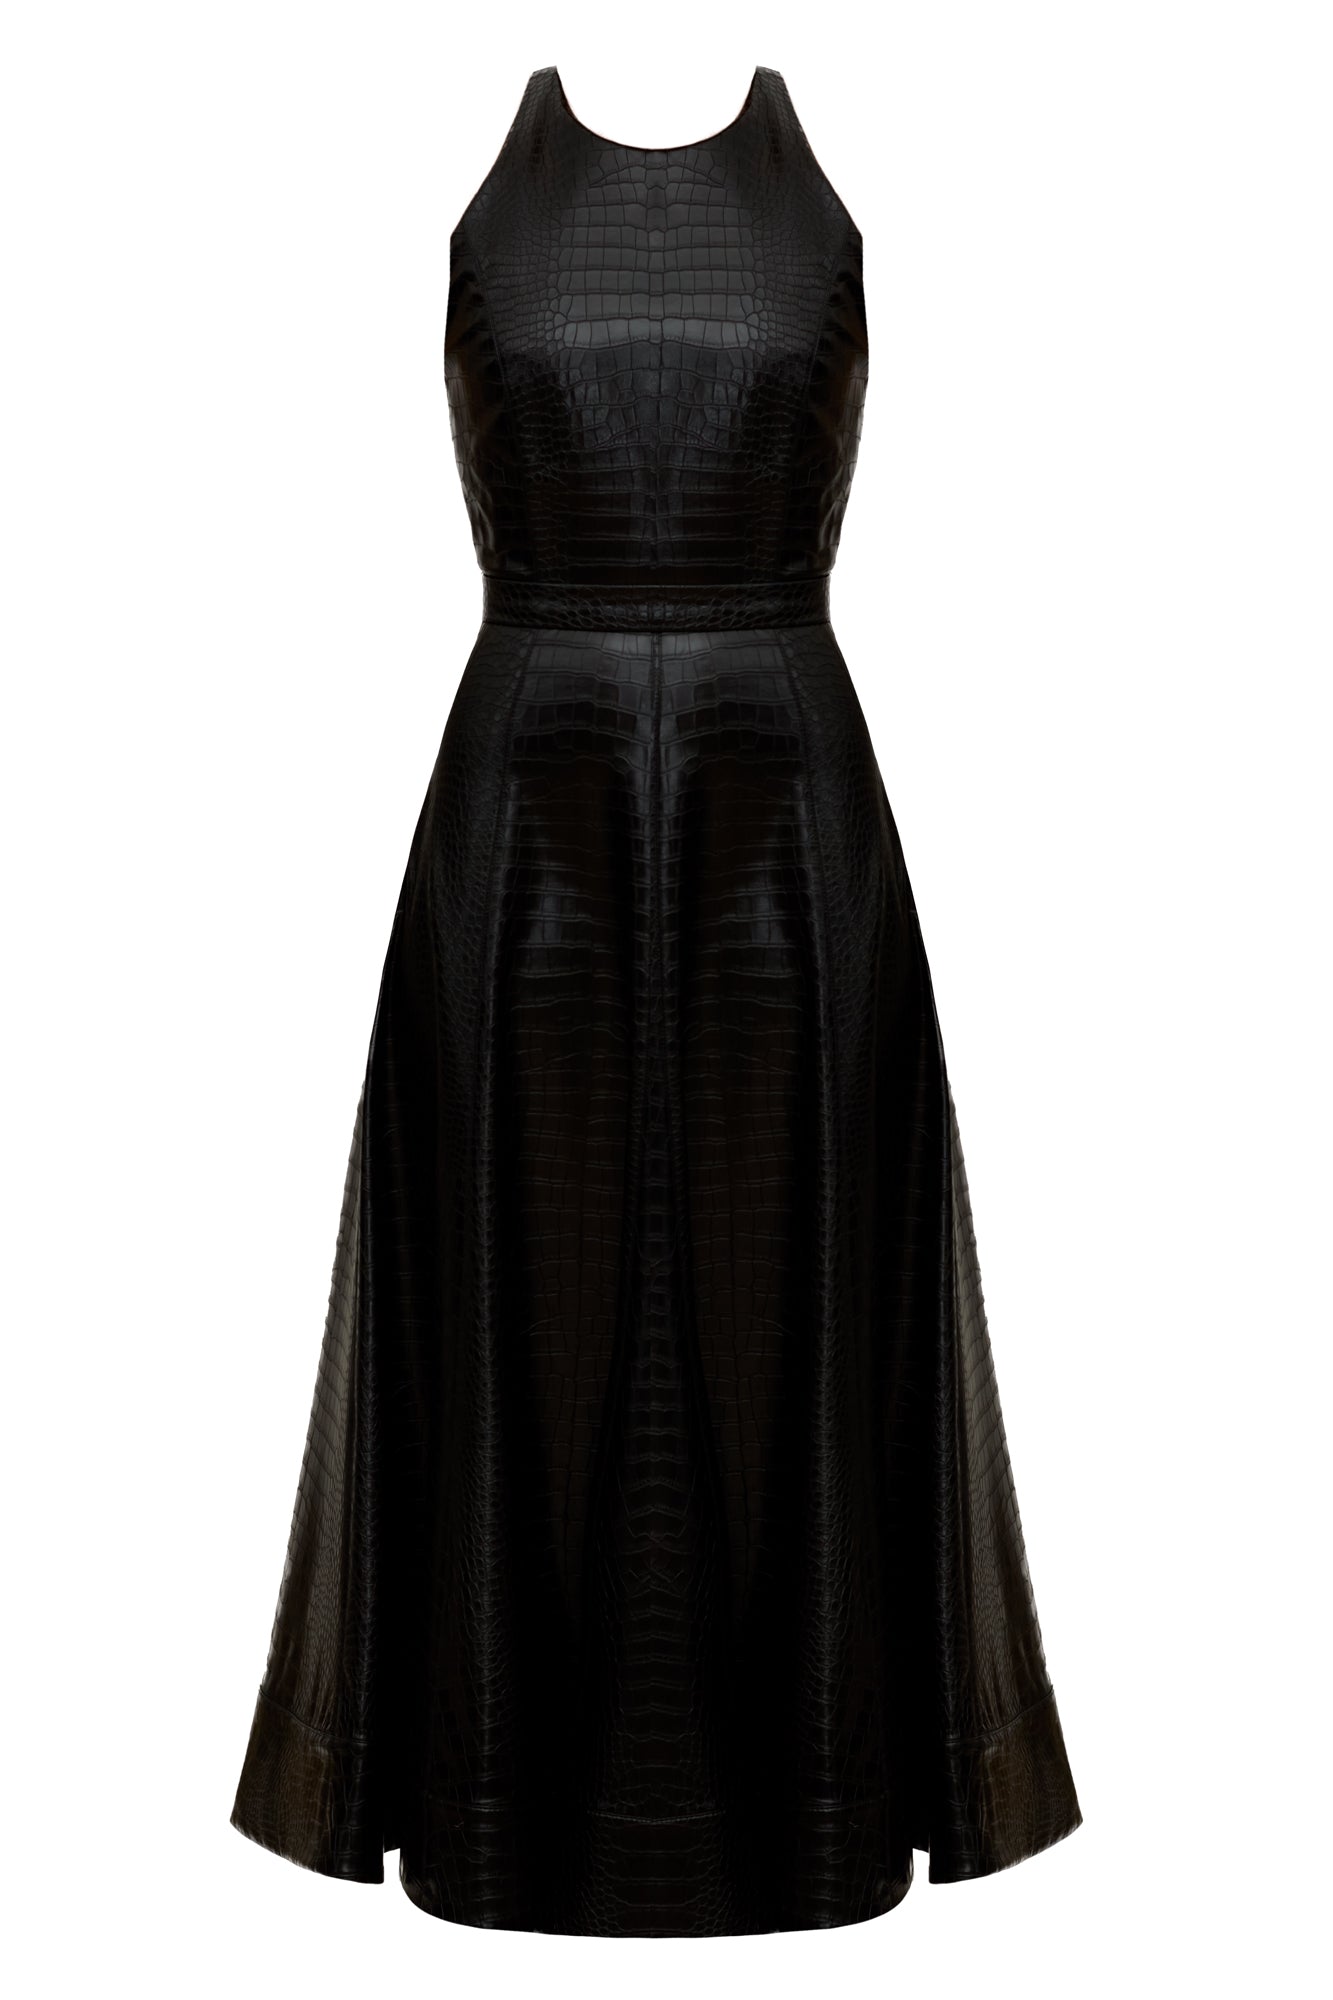 AVALON black textured vegan leather cocktail dress